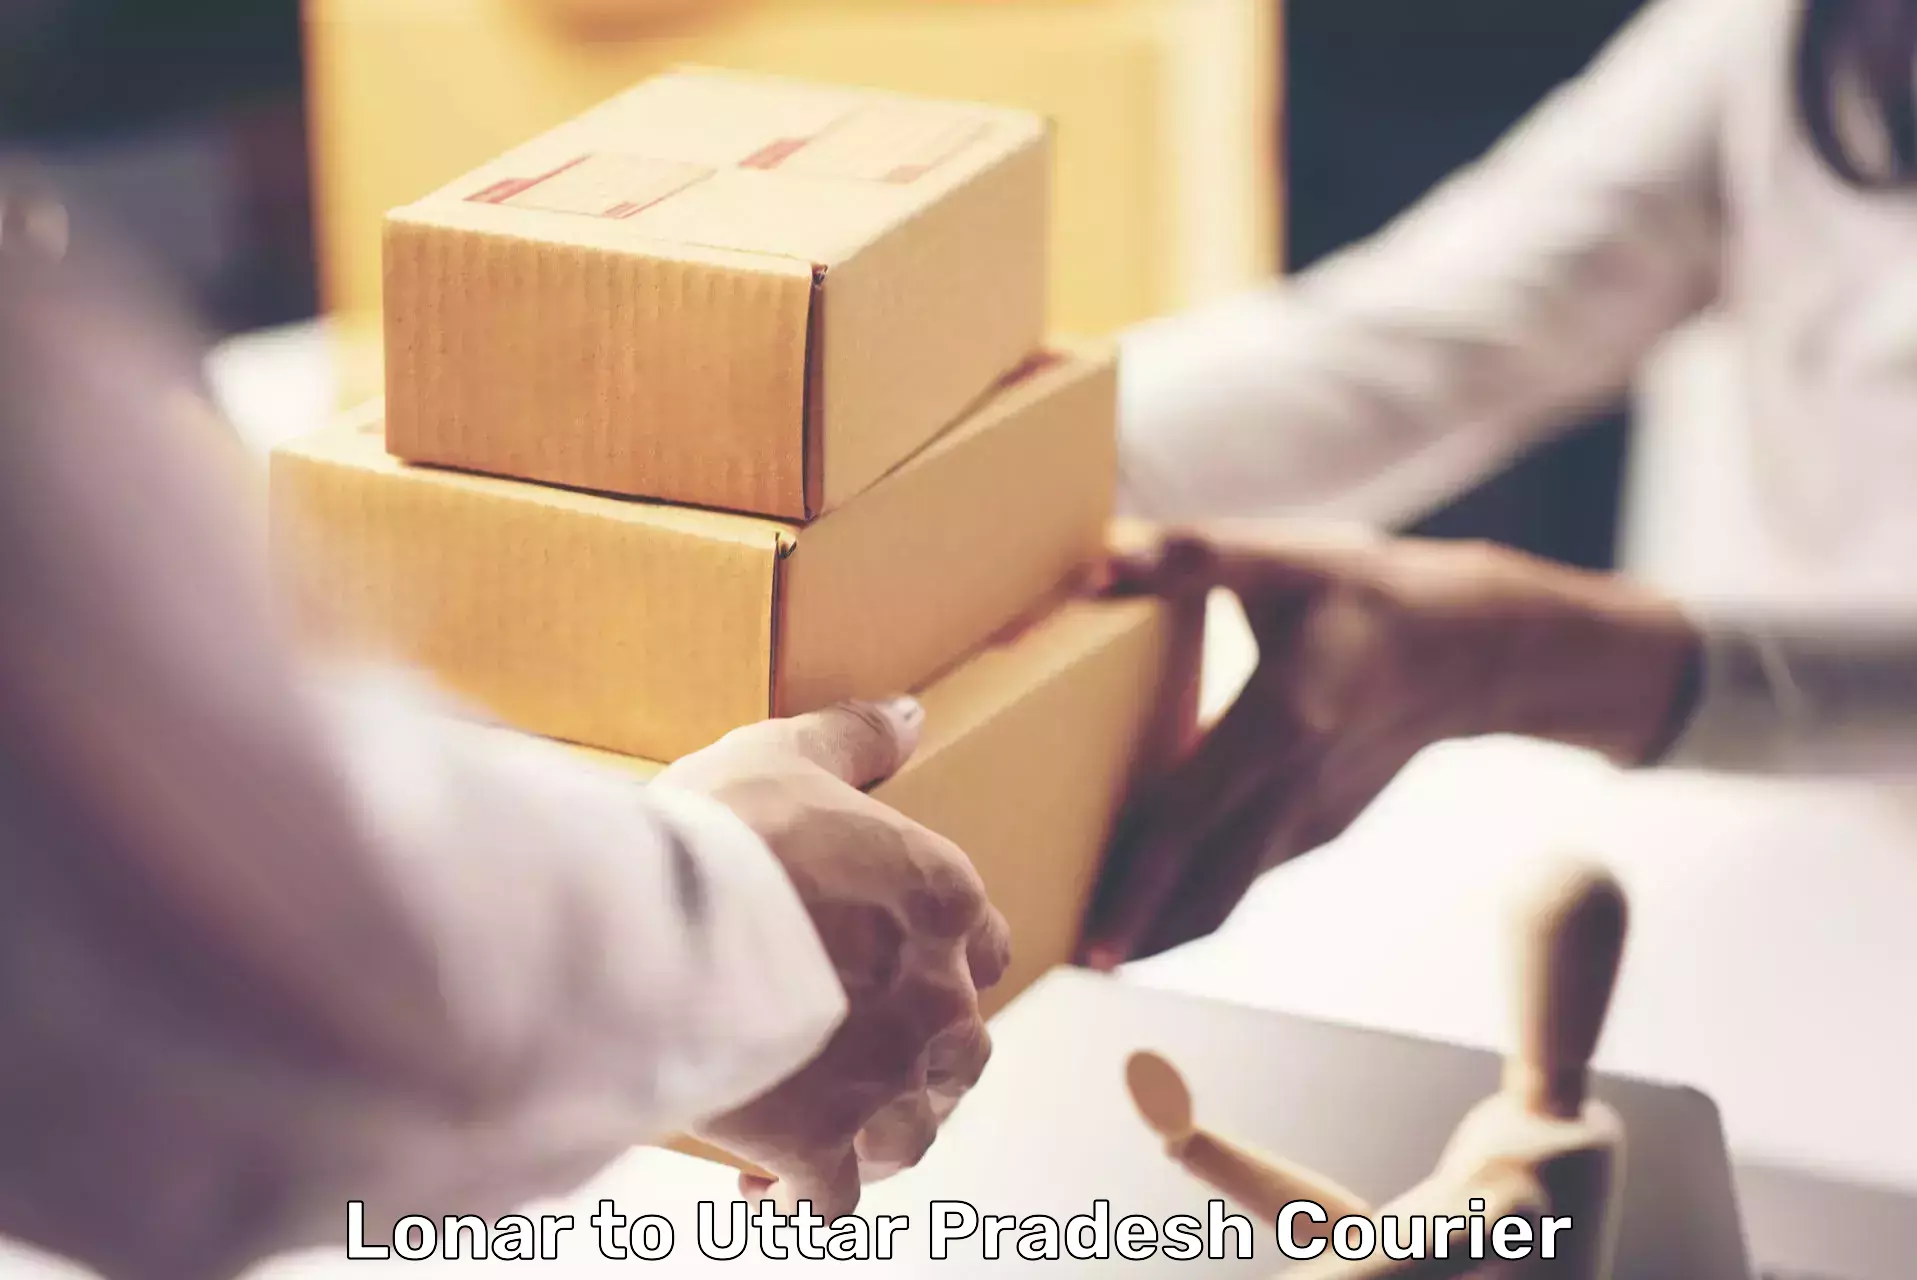 Express delivery capabilities Lonar to Uttar Pradesh